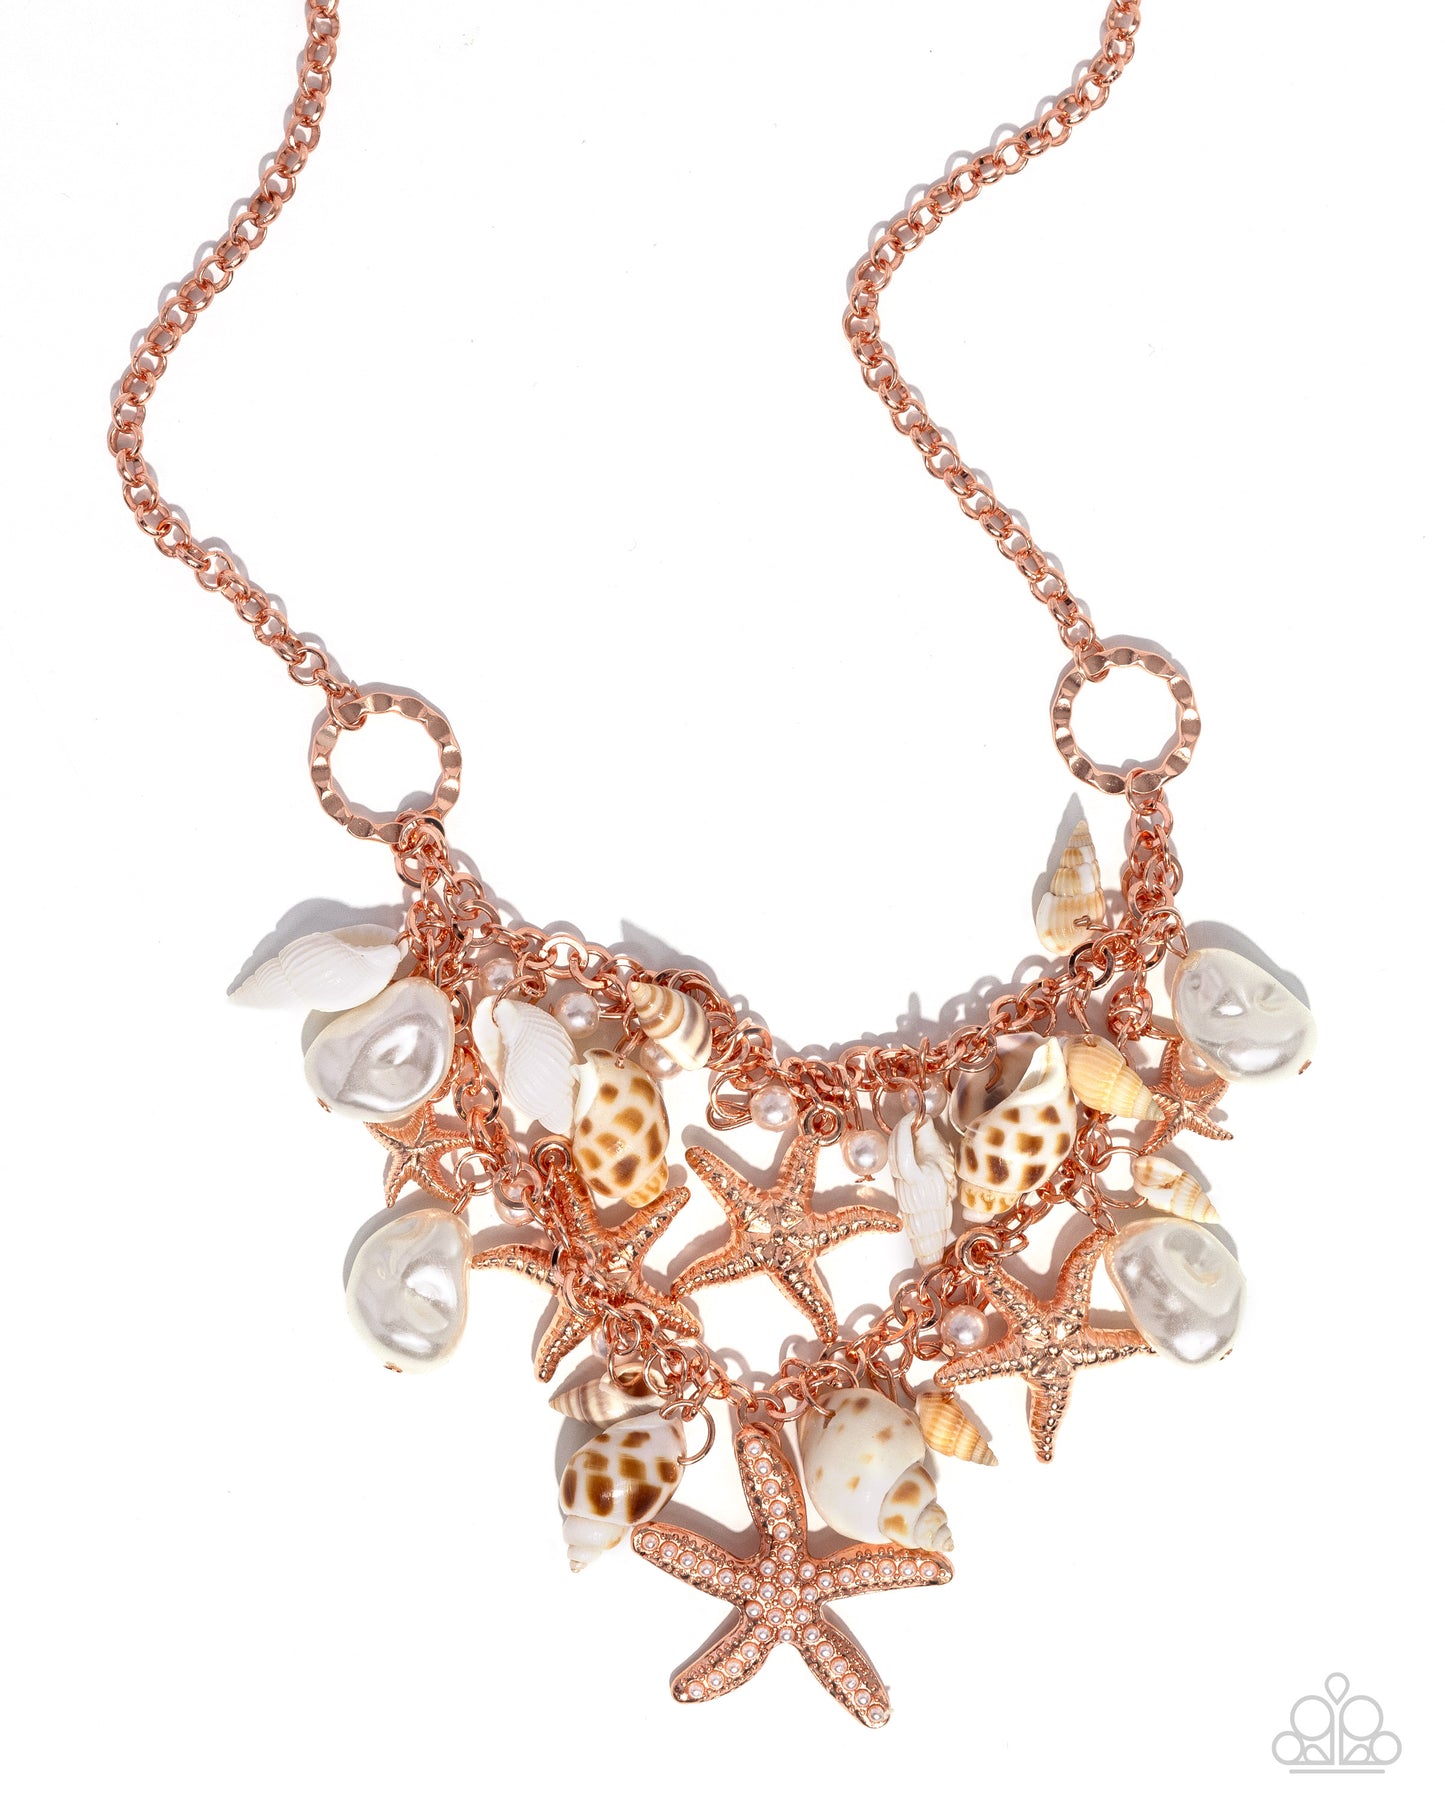 Paparazzi Accessories - Seashell Shanty - Copper Necklace